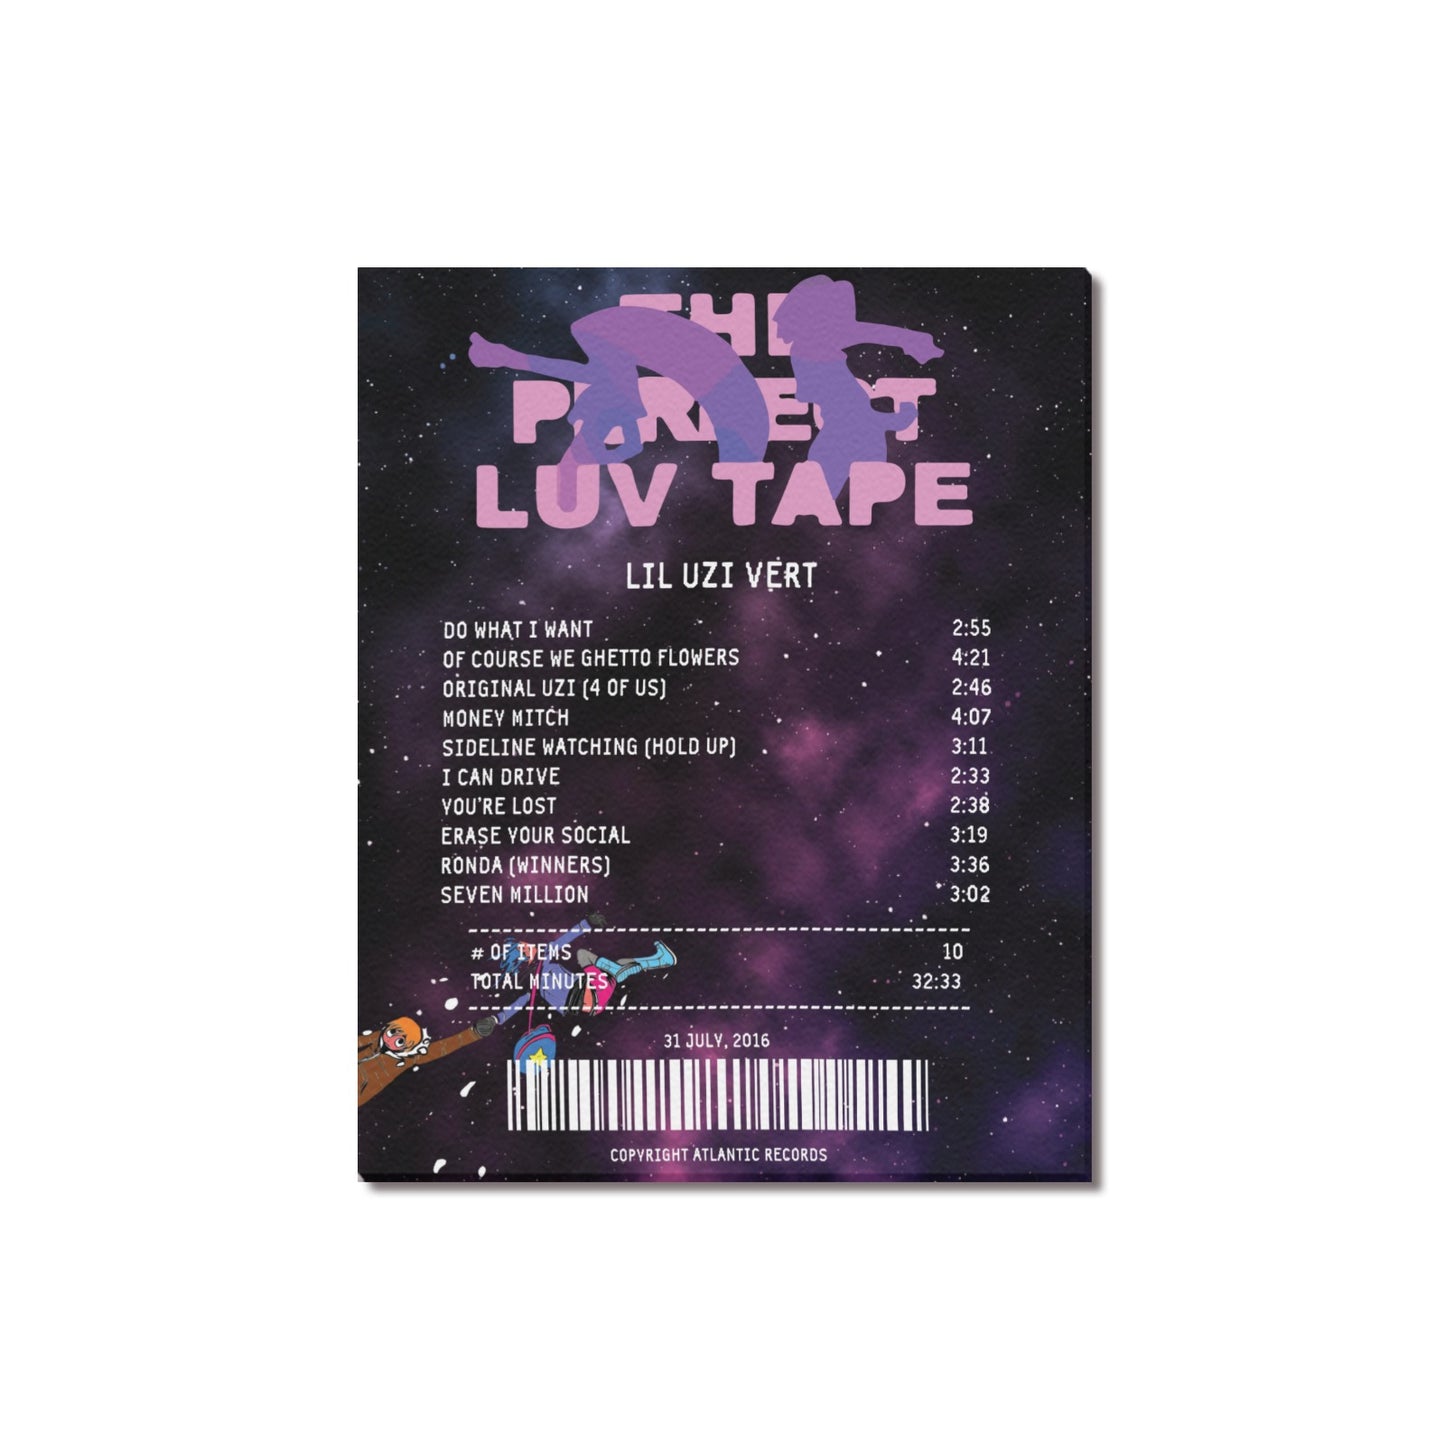 The Perfect Luv Tape - Lil Uzi Vert [Canvas]